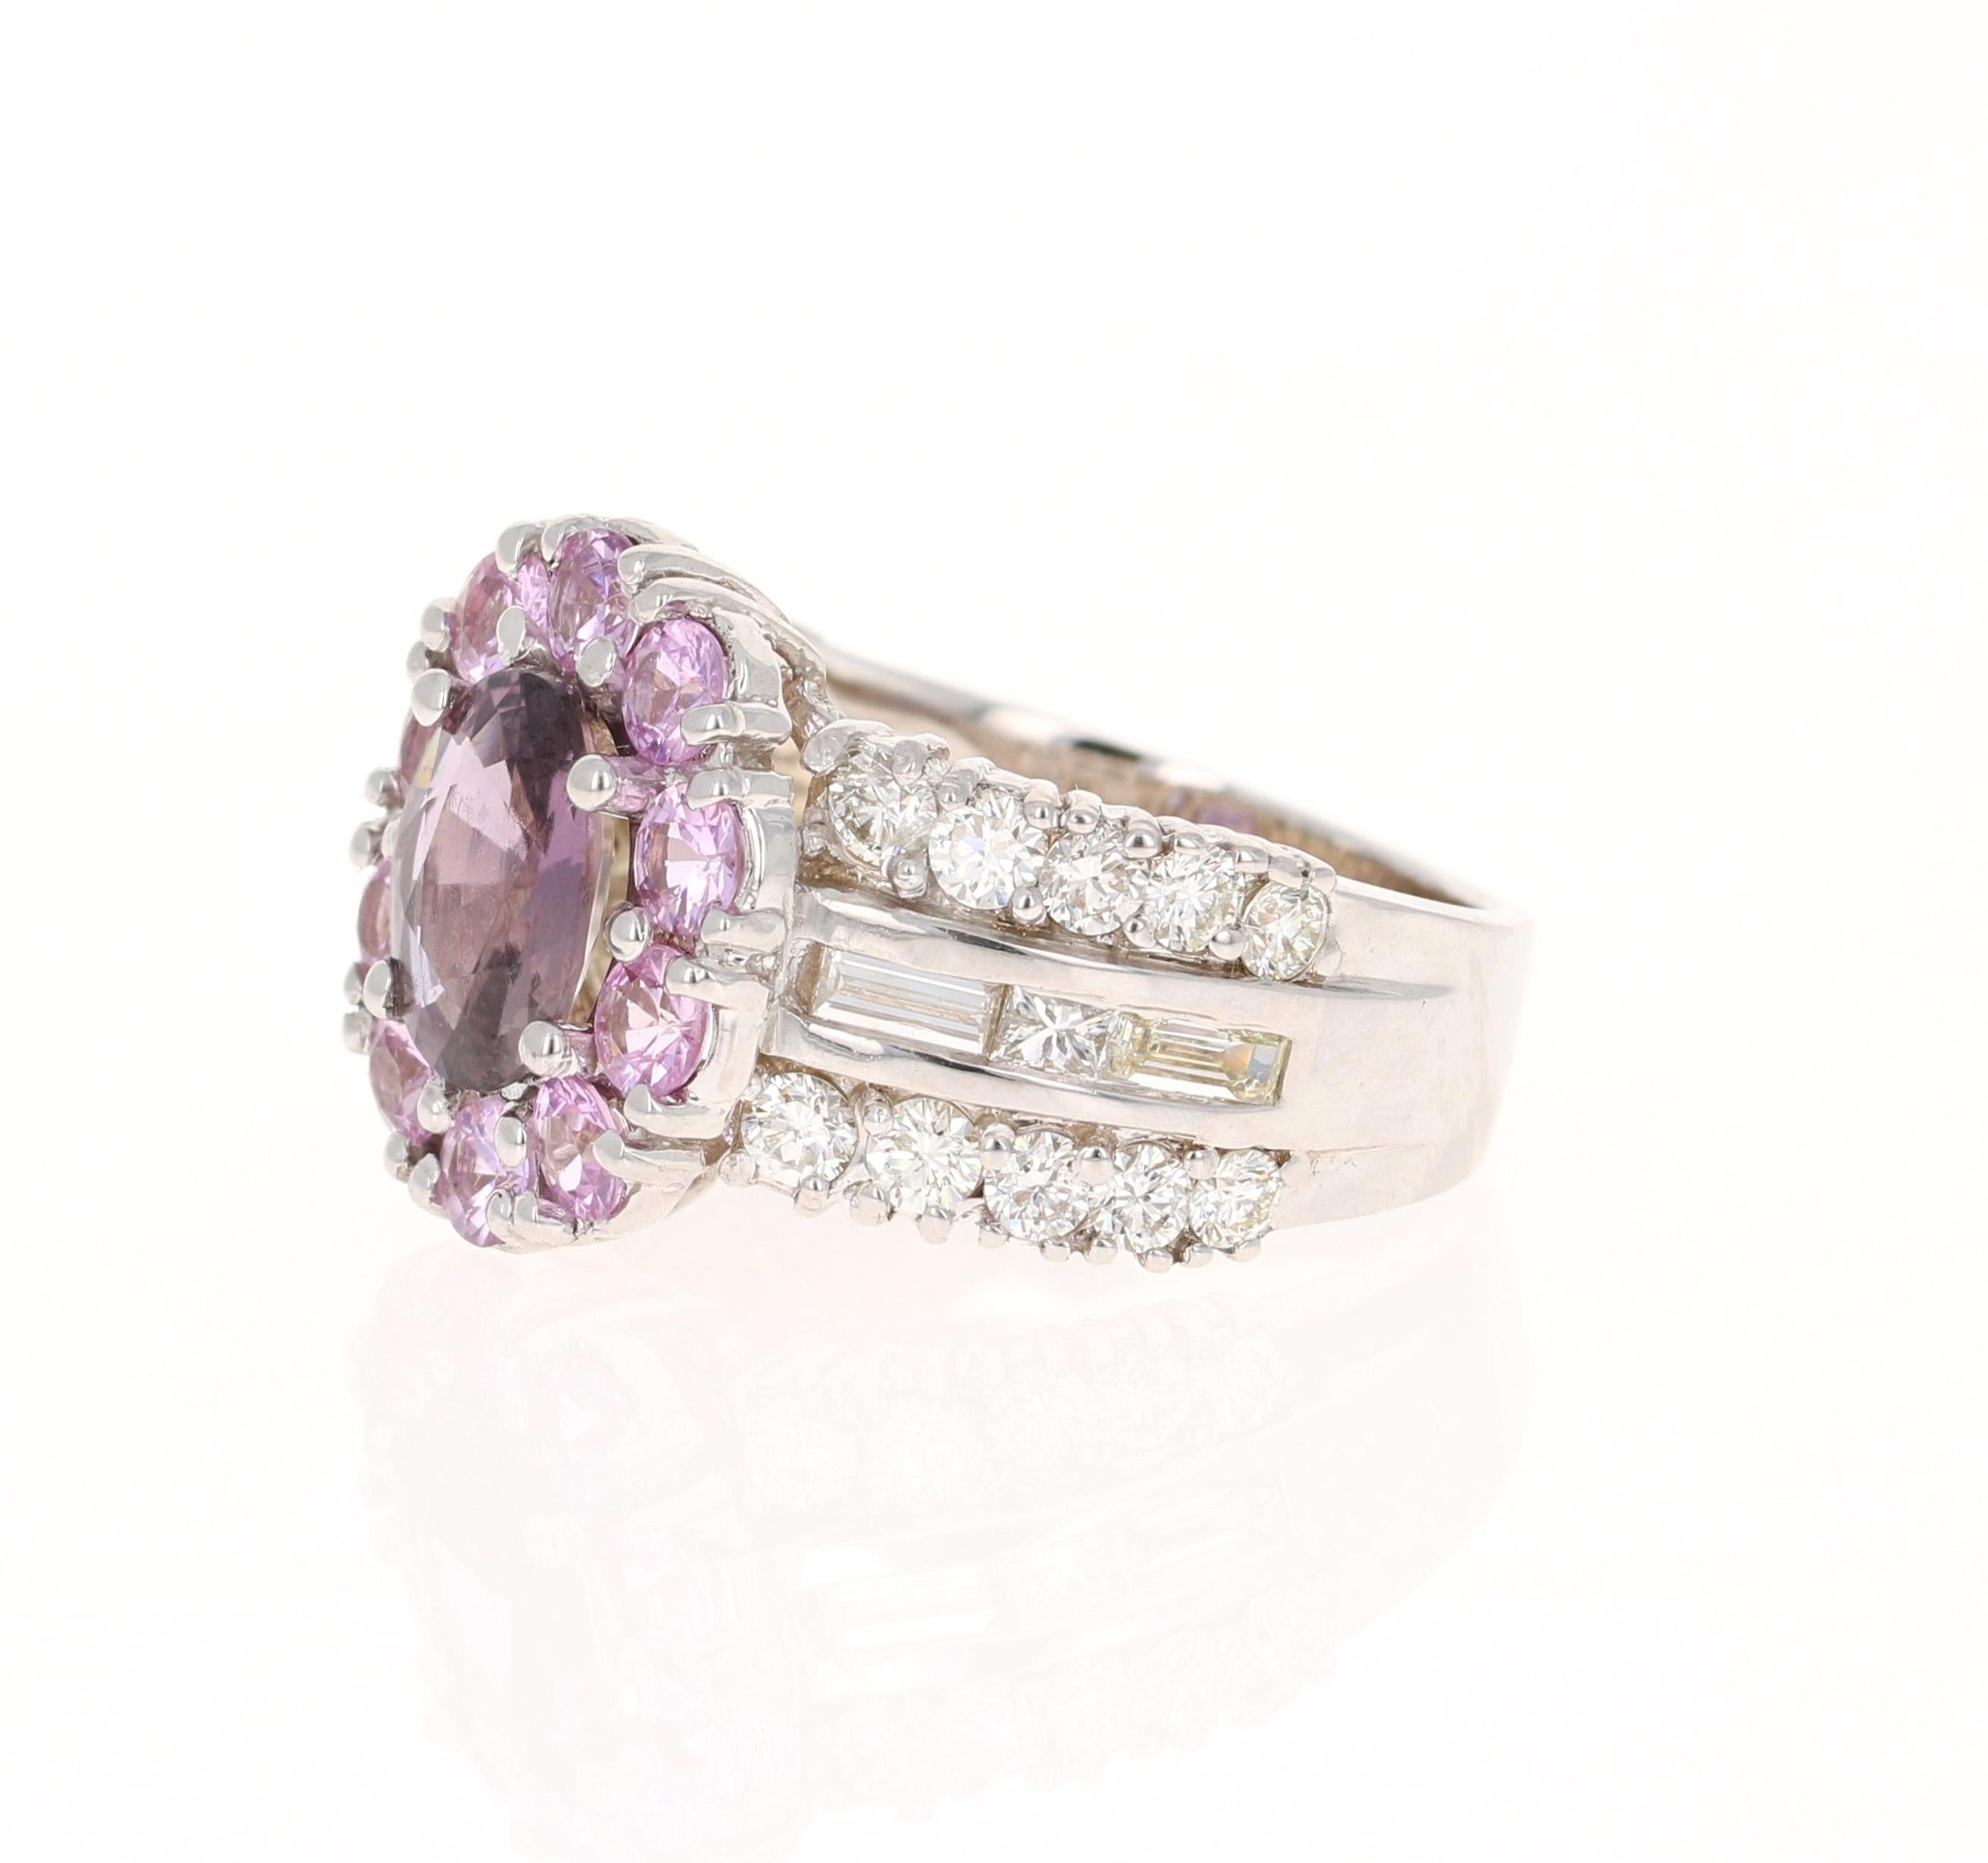 Oval Cut GIA Certified 3.99 Carat Pink Purple Sapphire Diamond 18 Karat White Gold Ring For Sale